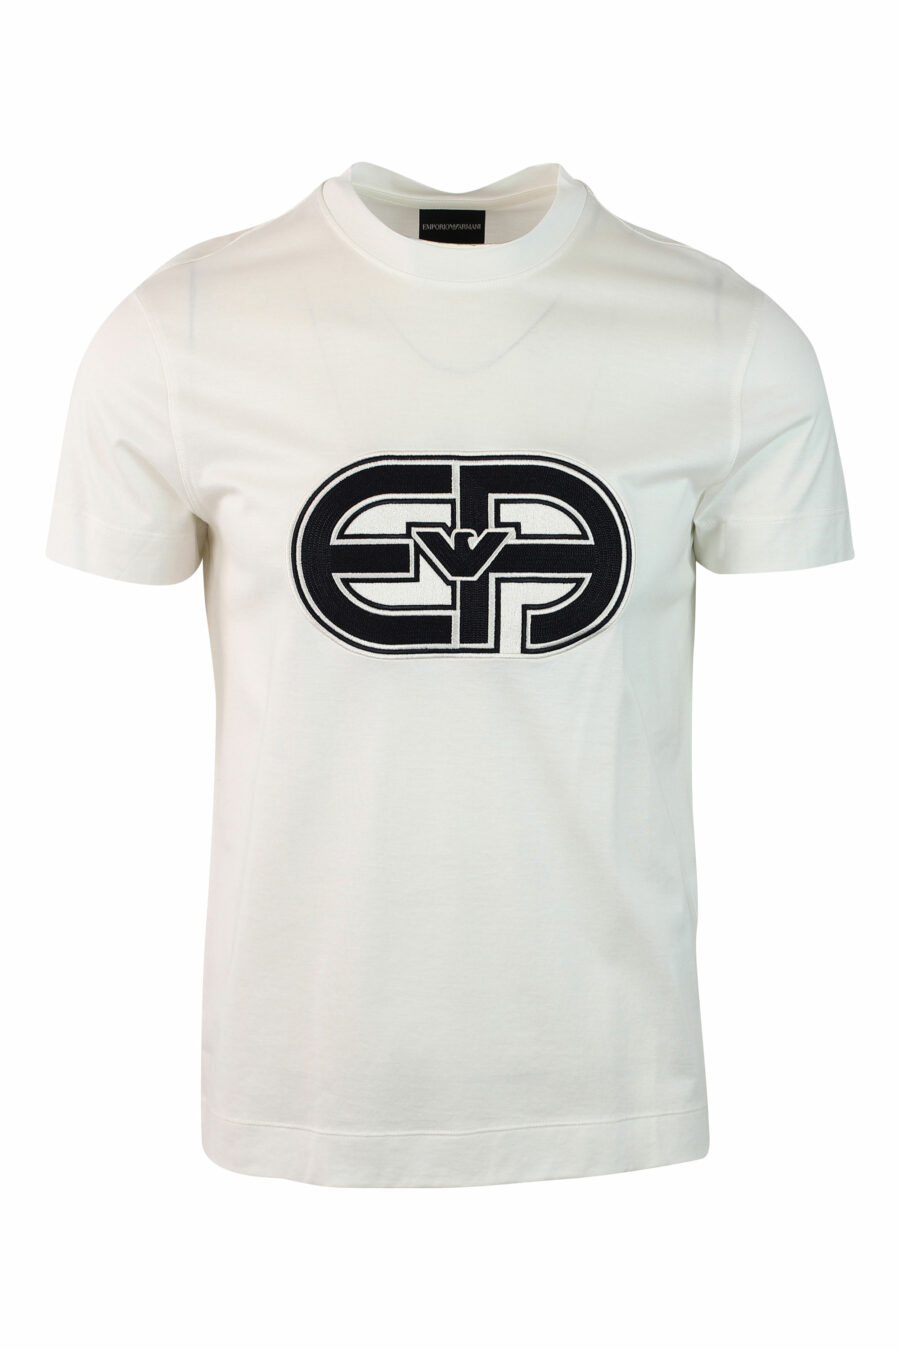 Emporio Armani - Camiseta blanca con maxilogo redondo - BLS Fashion